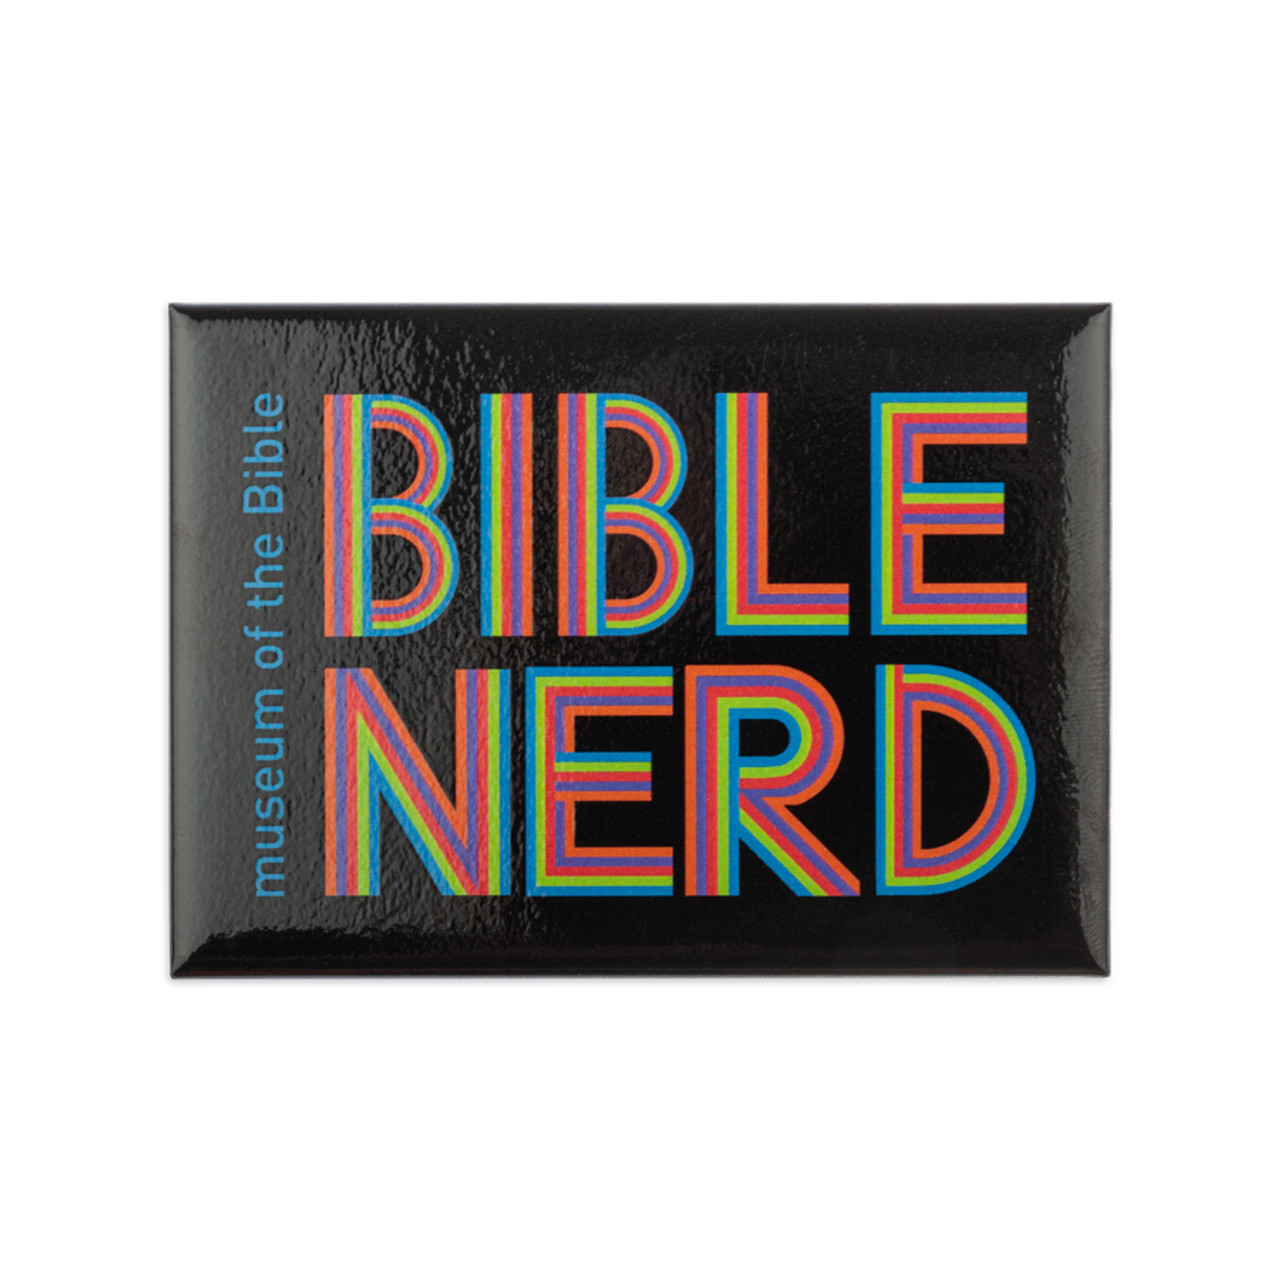 Bible Nerd Sticker - Museum of the Bible Store